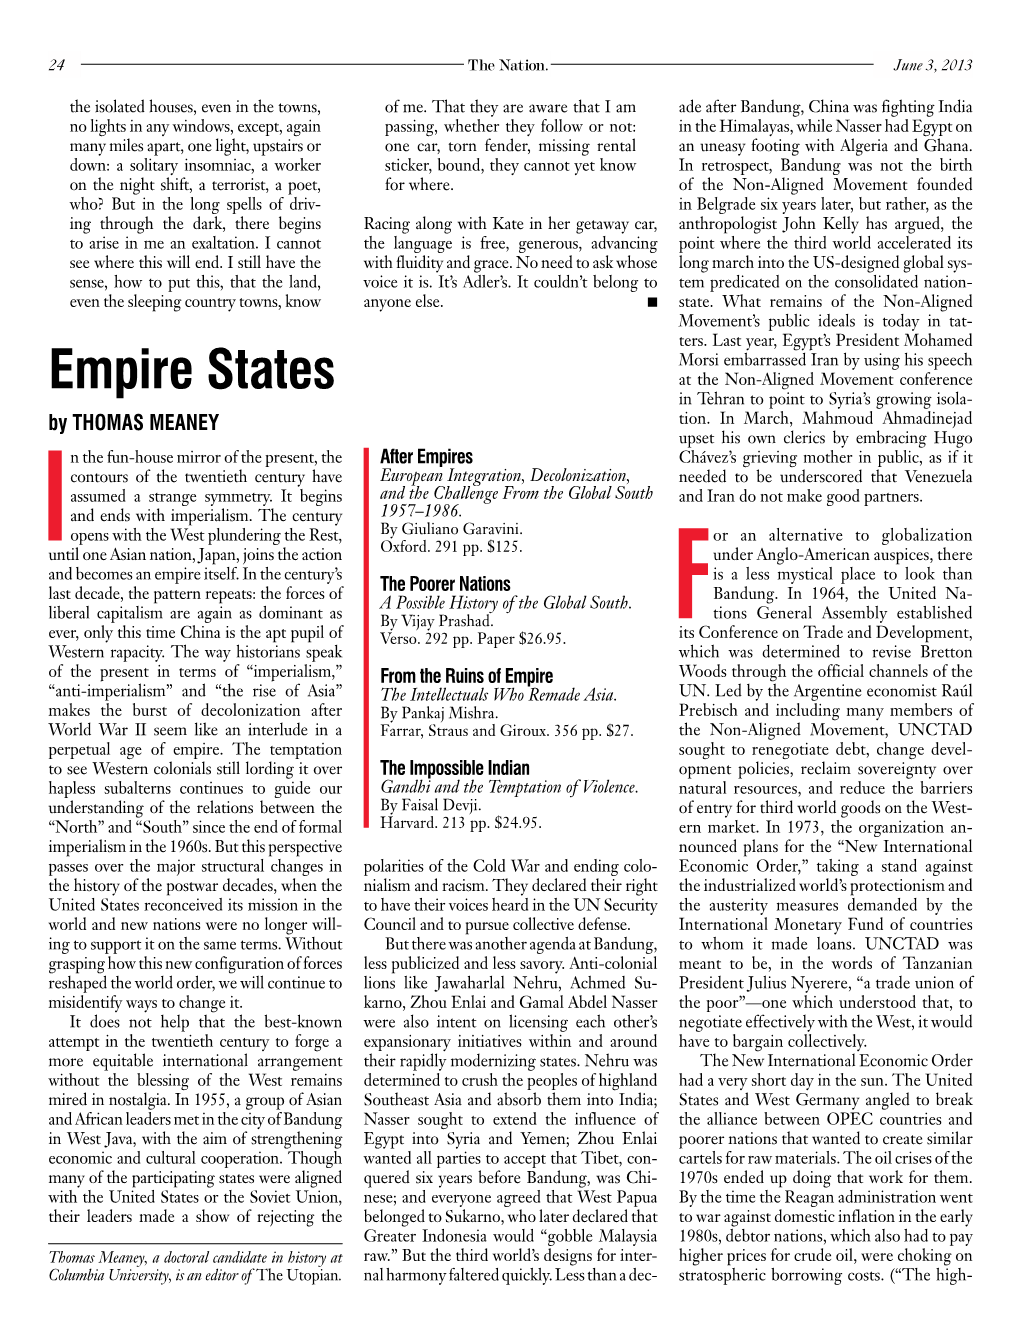 Empire States: on Pankaj Mishra